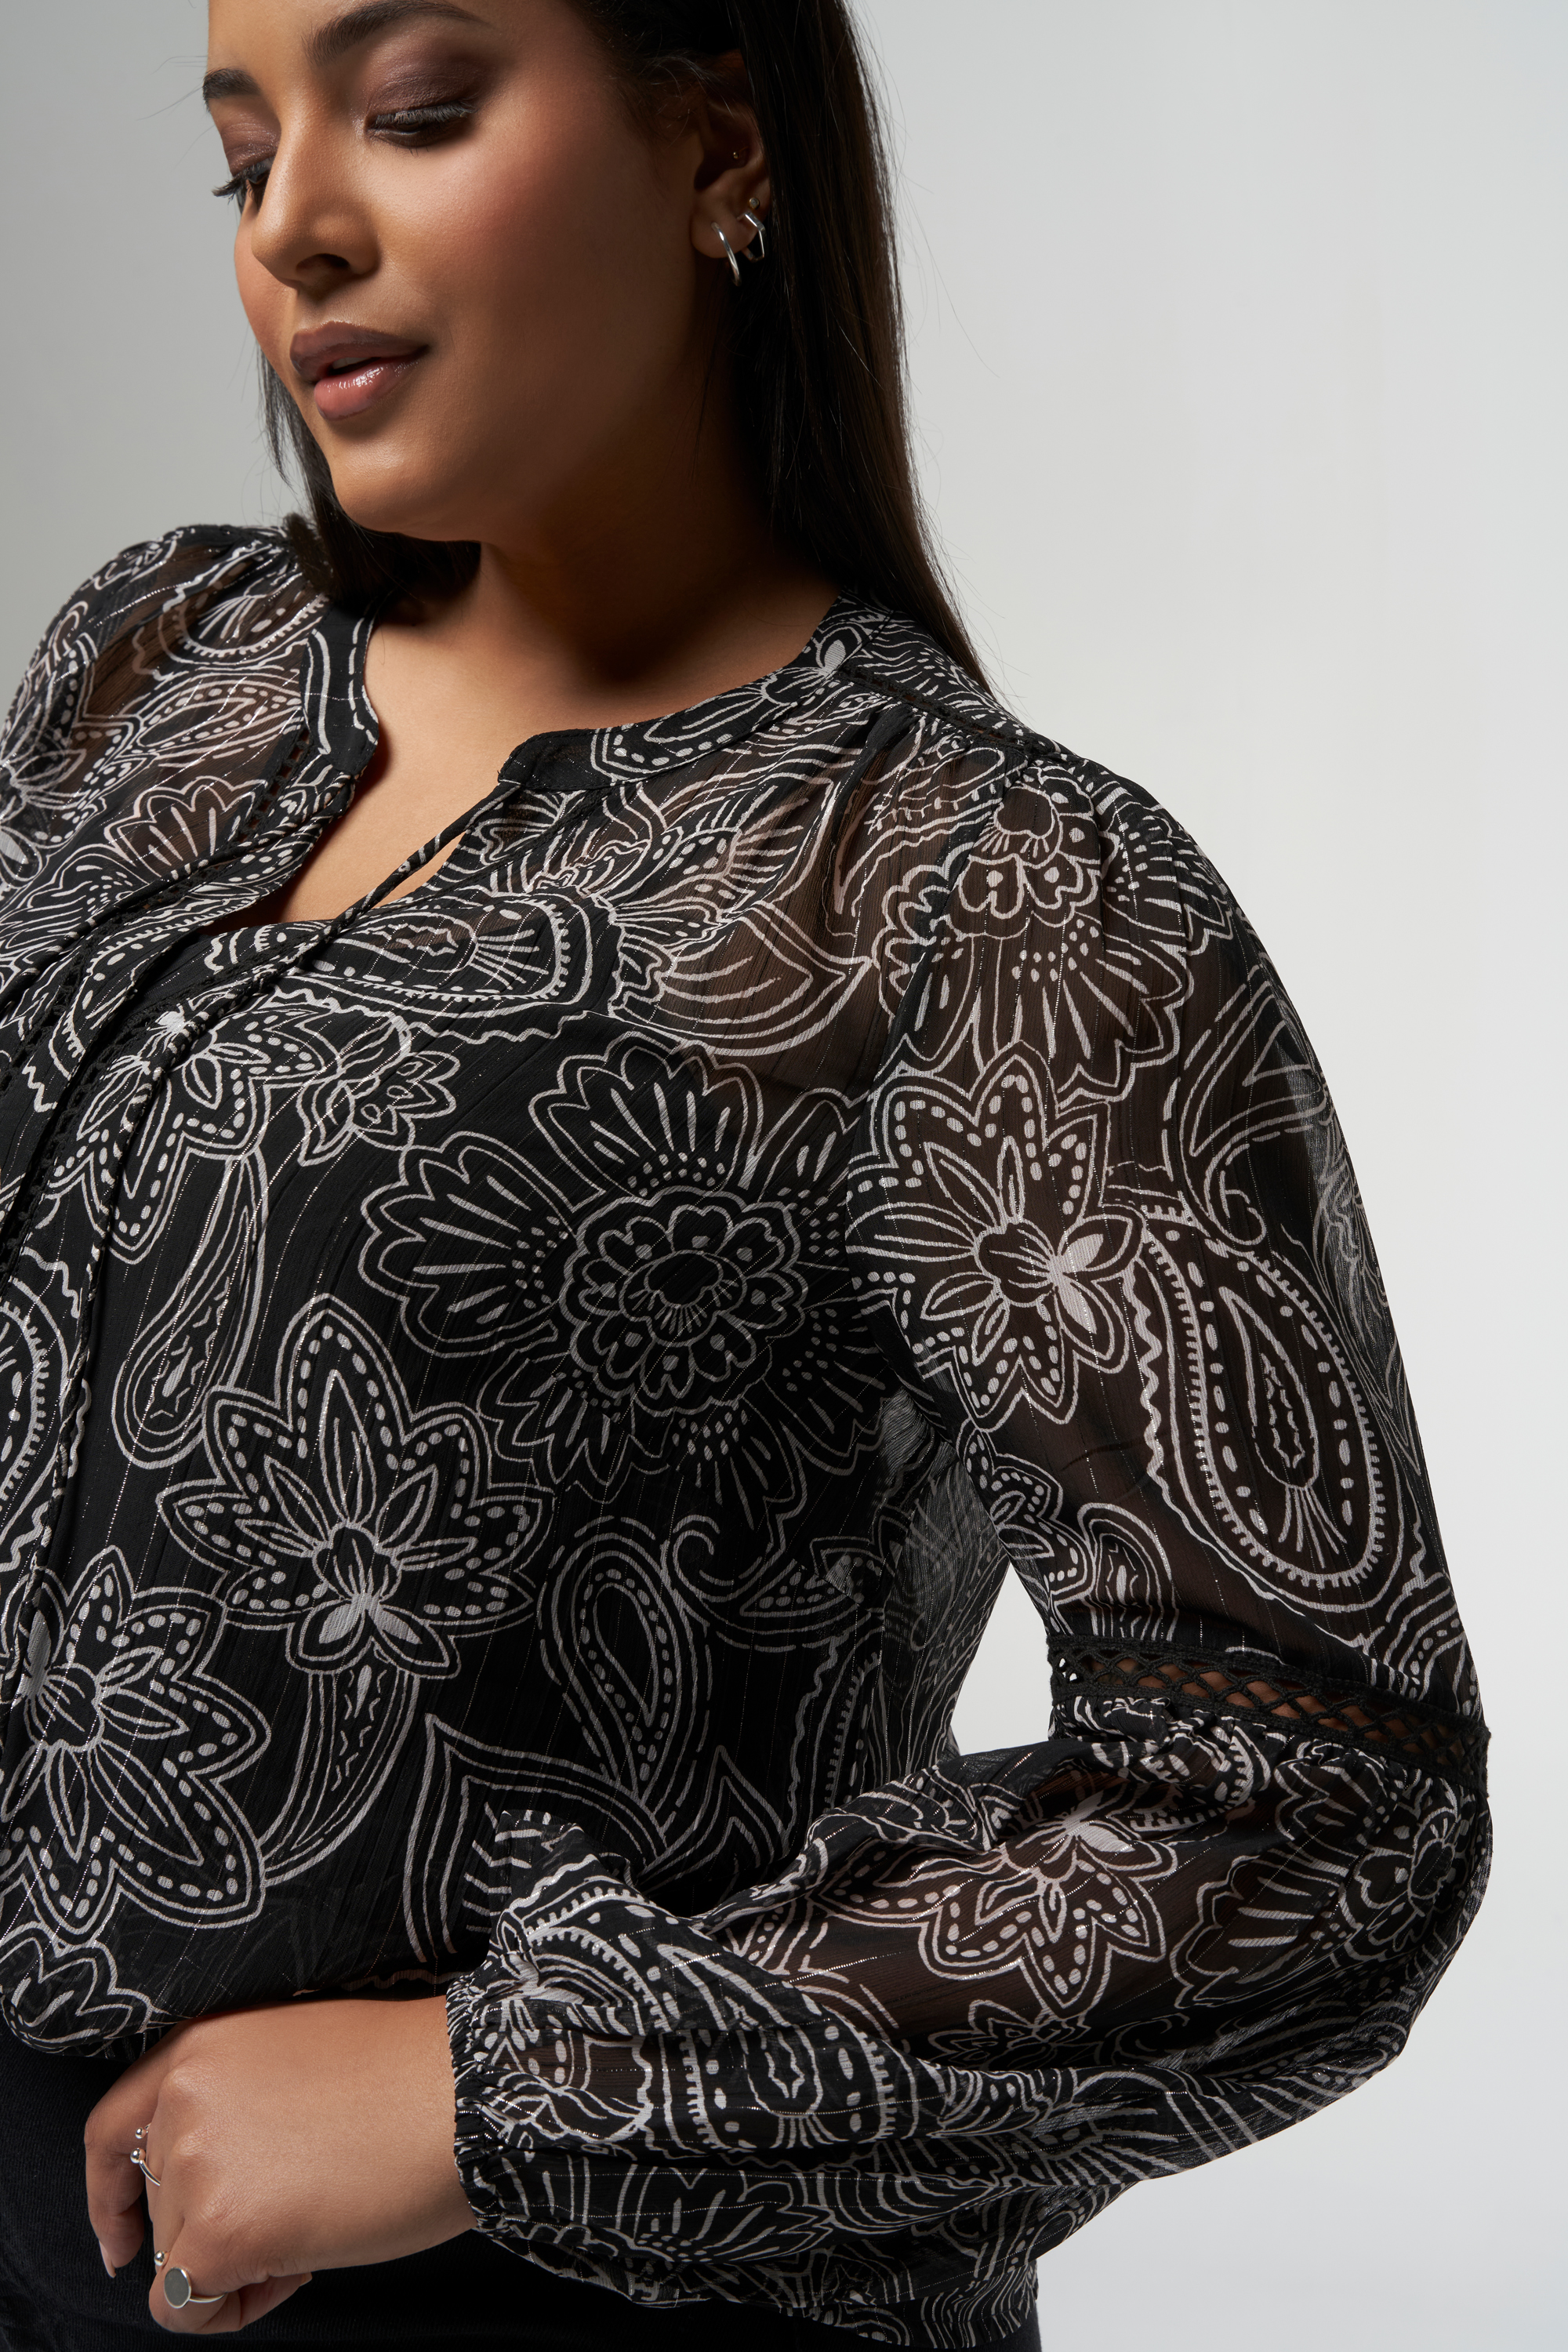 Damen Bluse mit Paisley-Print MS schwarz-weiss Multi | Mode